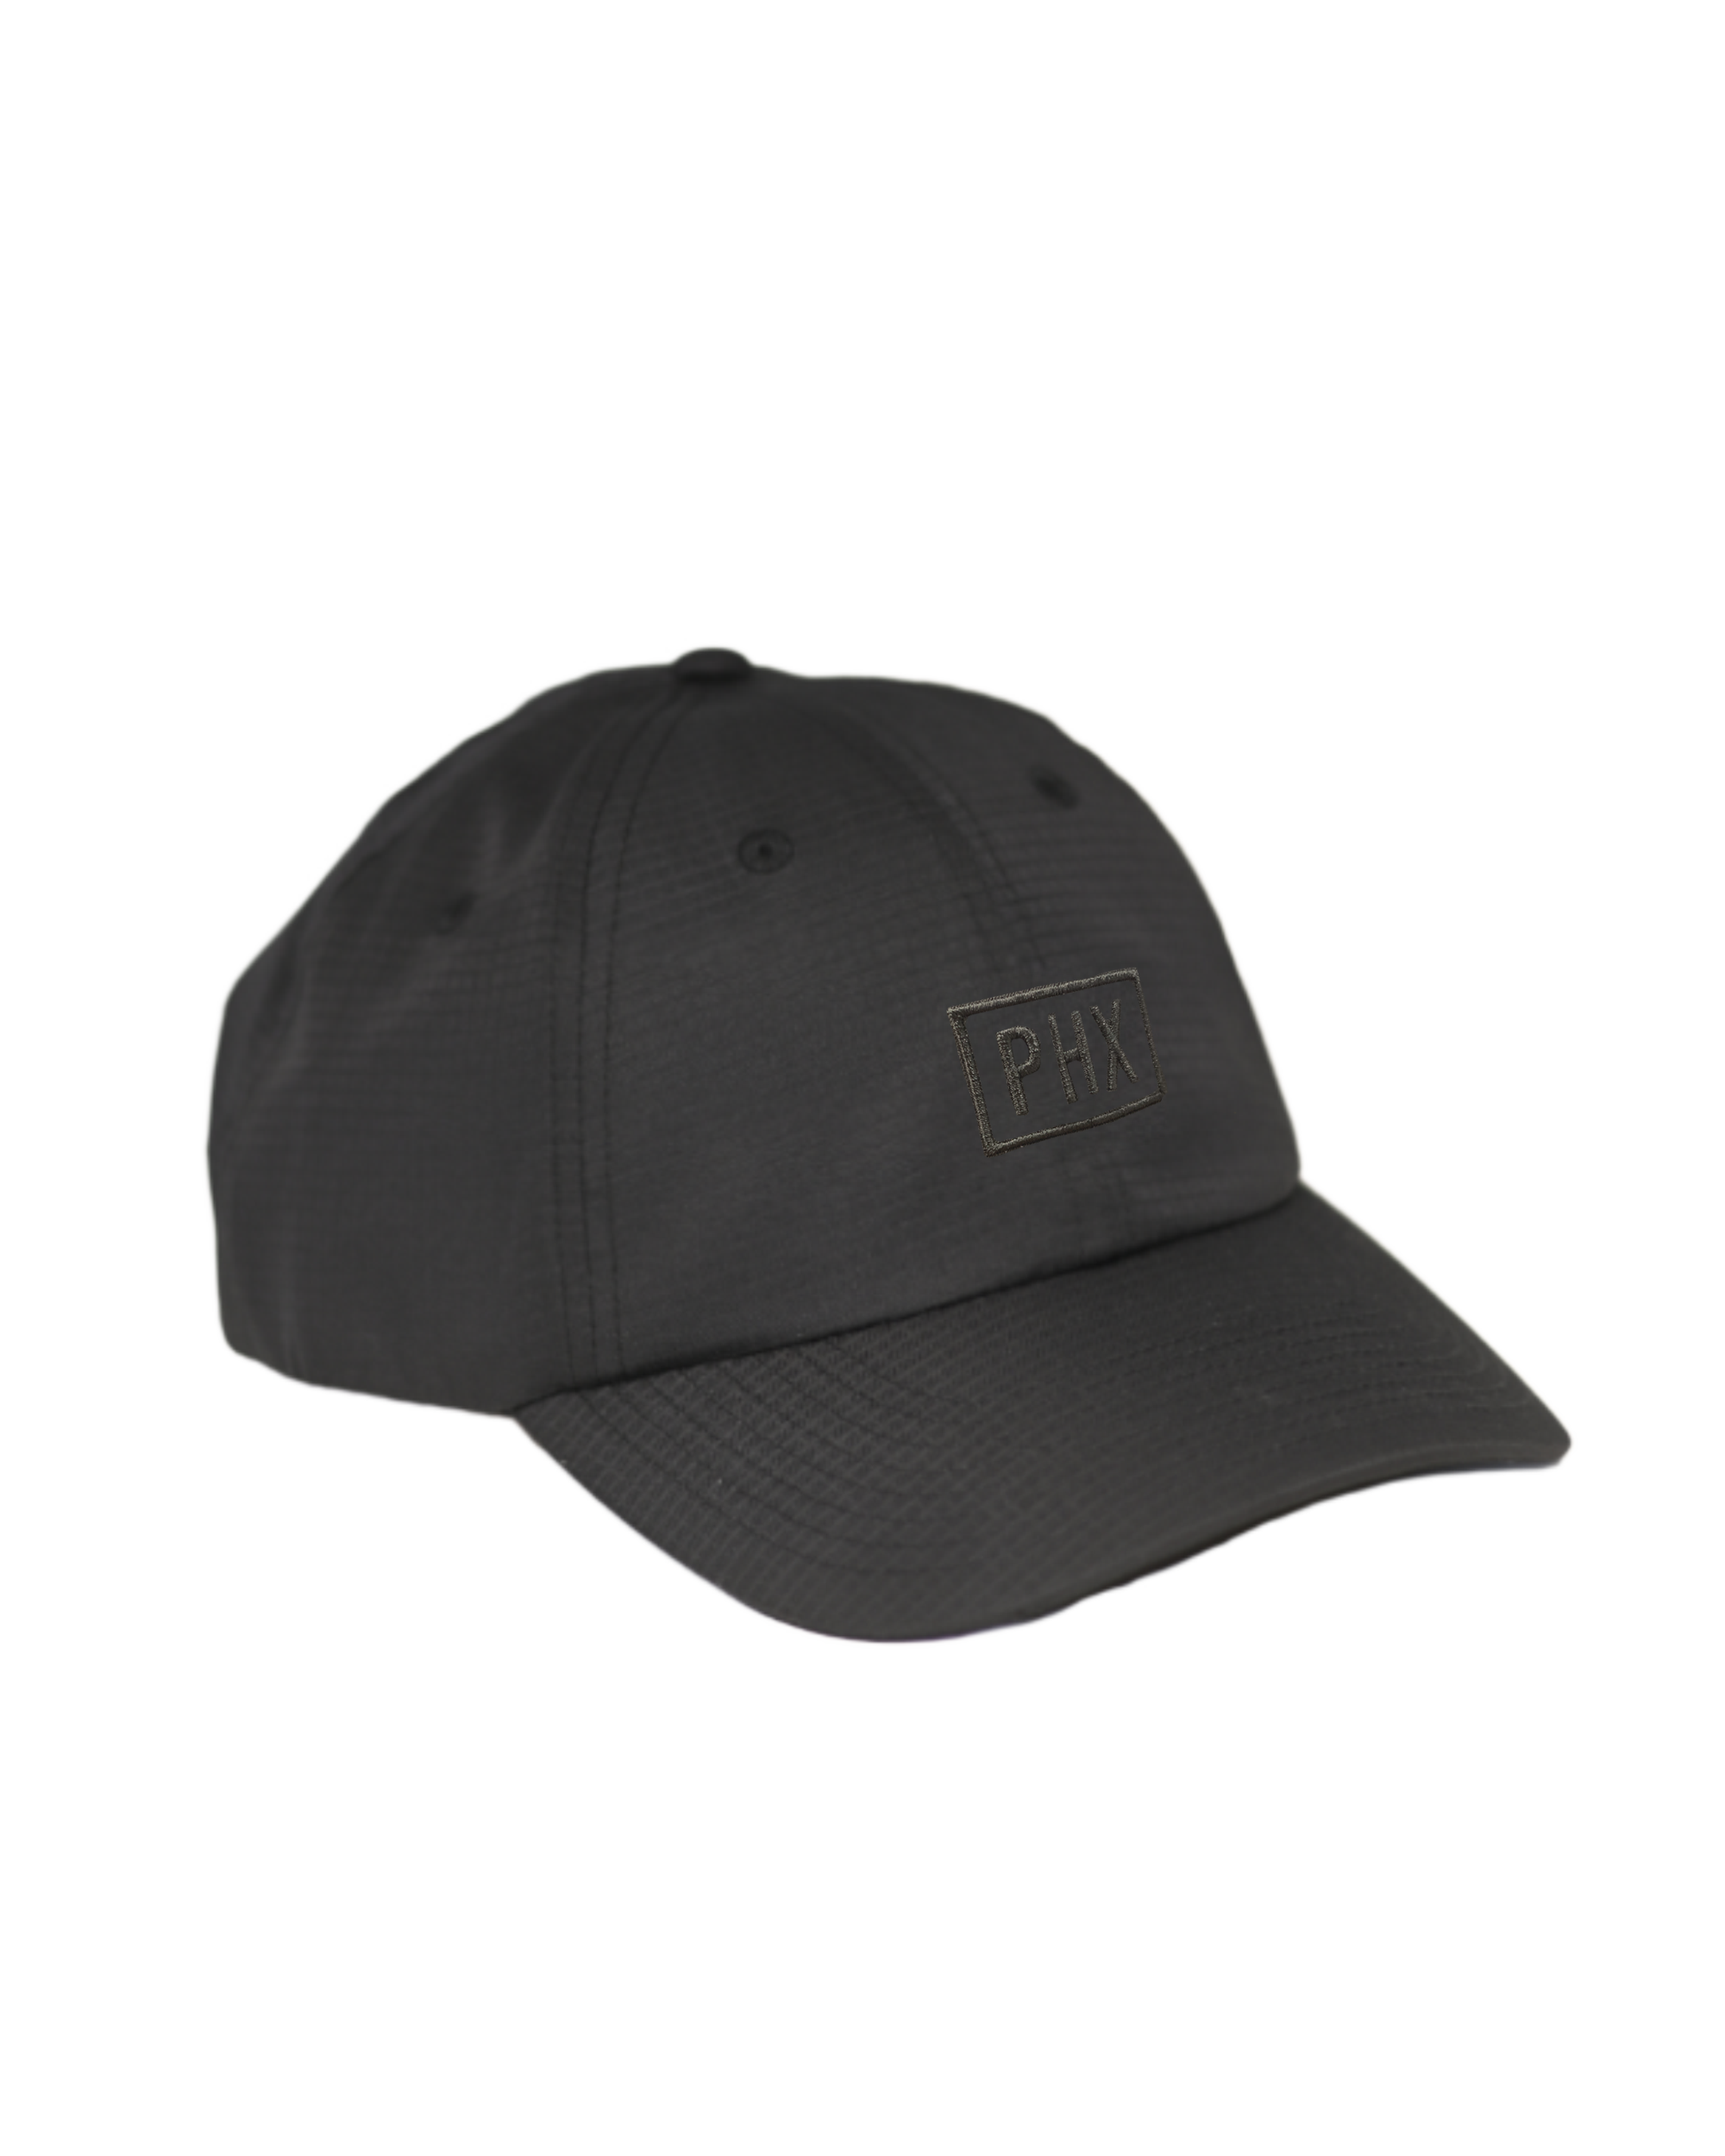 PHX Performance Hat